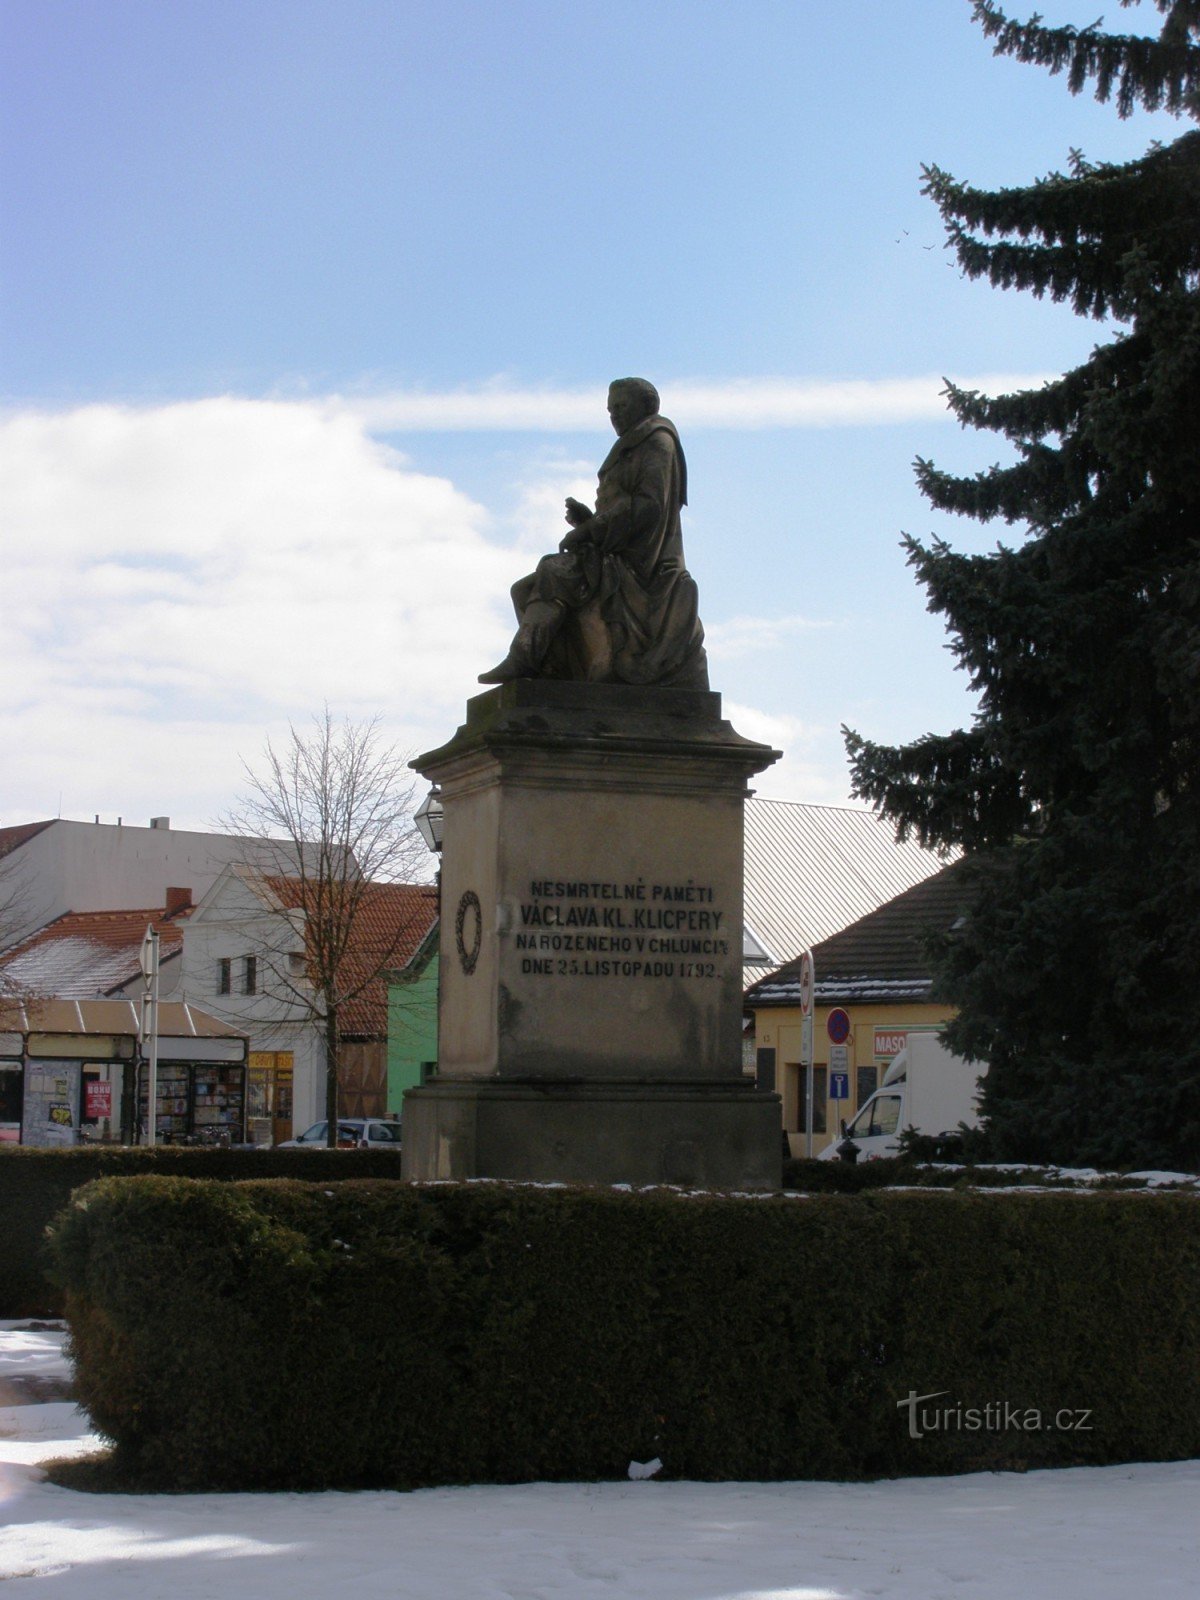 Chlumec nad Cidlinou - monument over Václav Kliment Klicpera